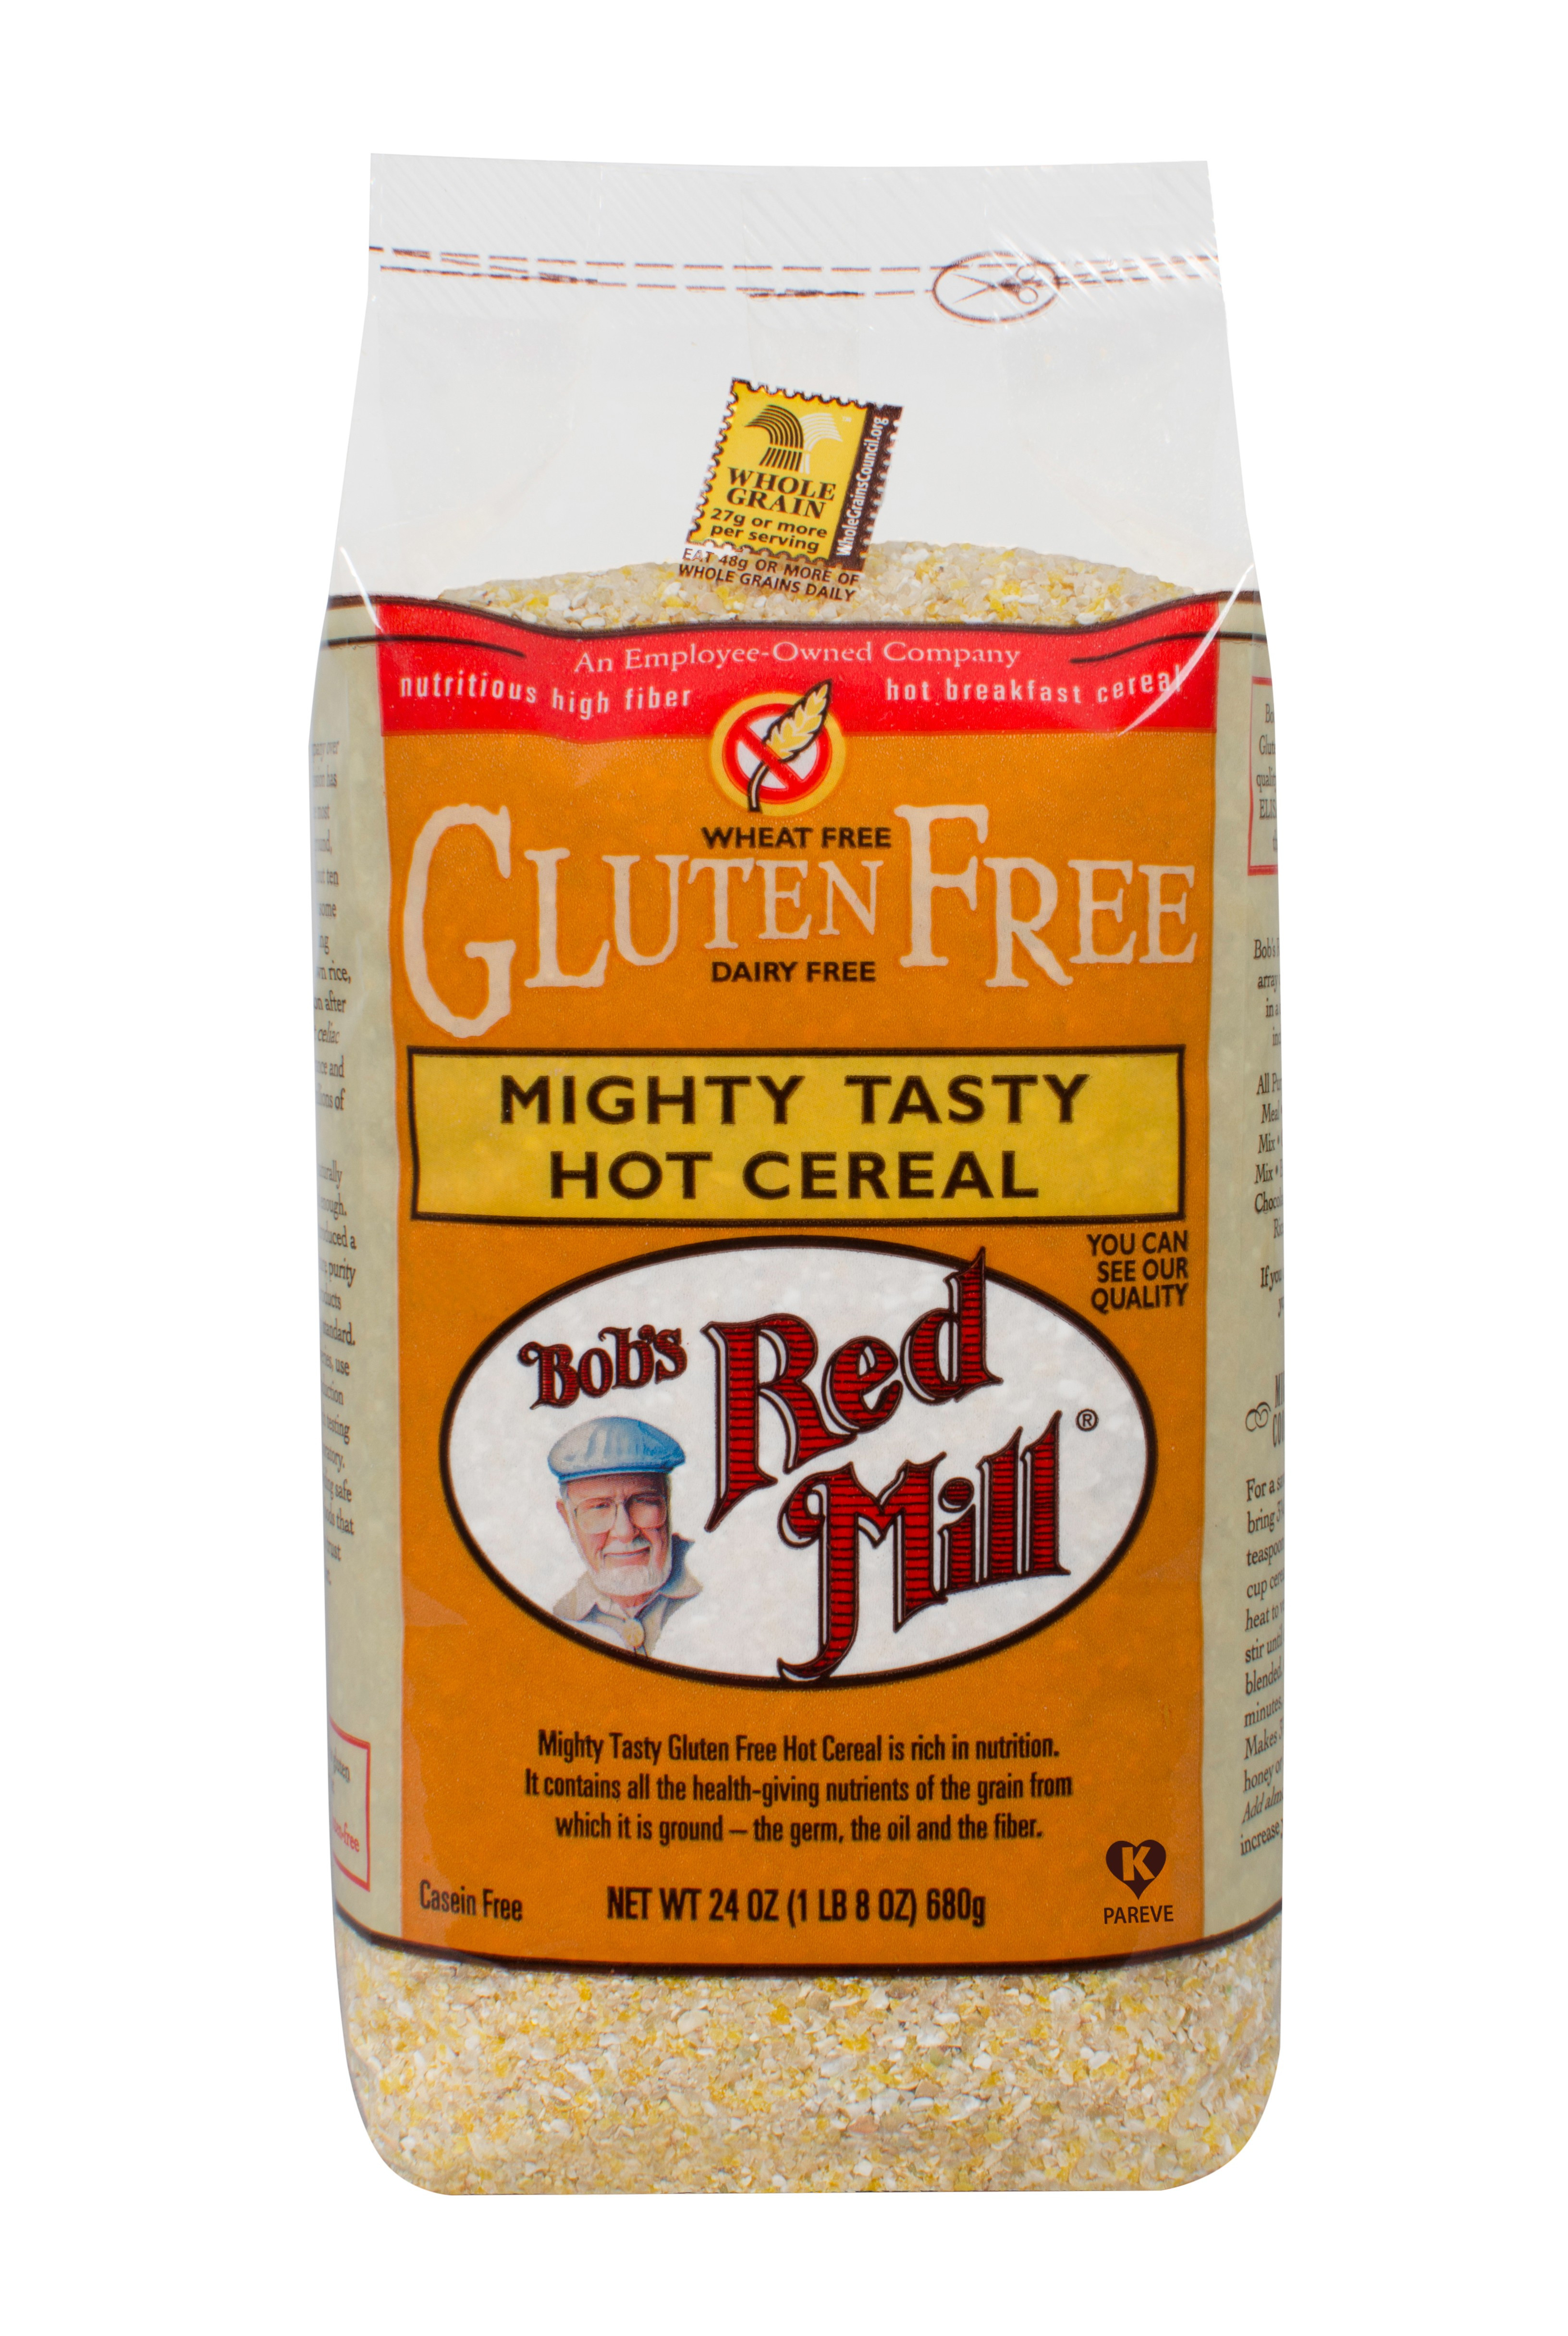 Bobs Red Mill Gluten Free Bread
 Gluten Free Might Tasty Hot Cereal Bob s Red Mill